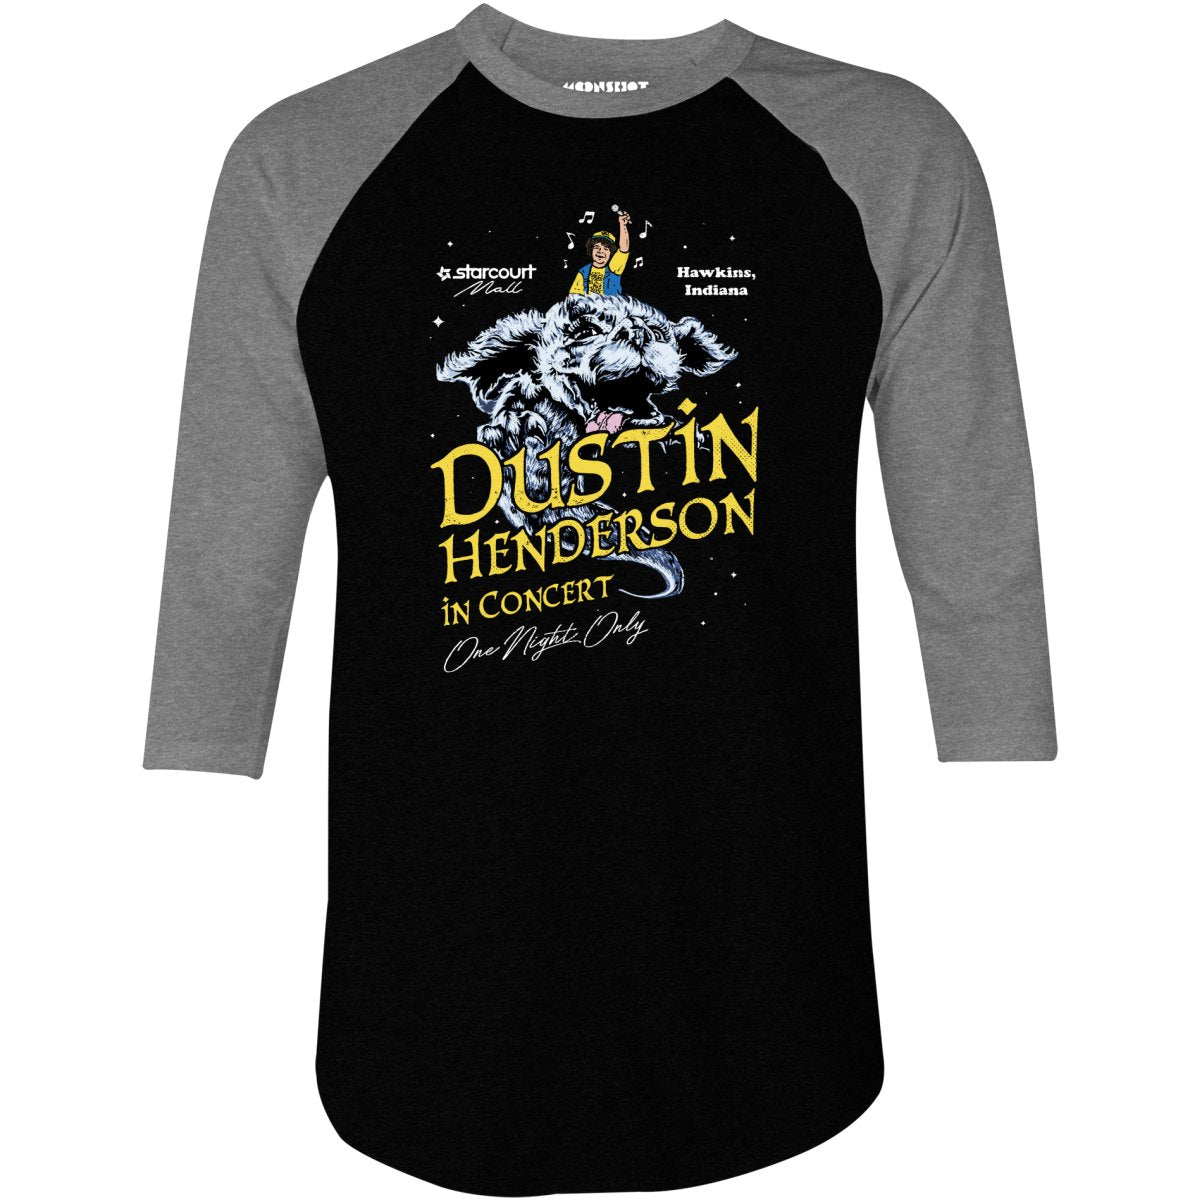 Dustin Henderson in Concert - 3/4 Sleeve Raglan T-Shirt